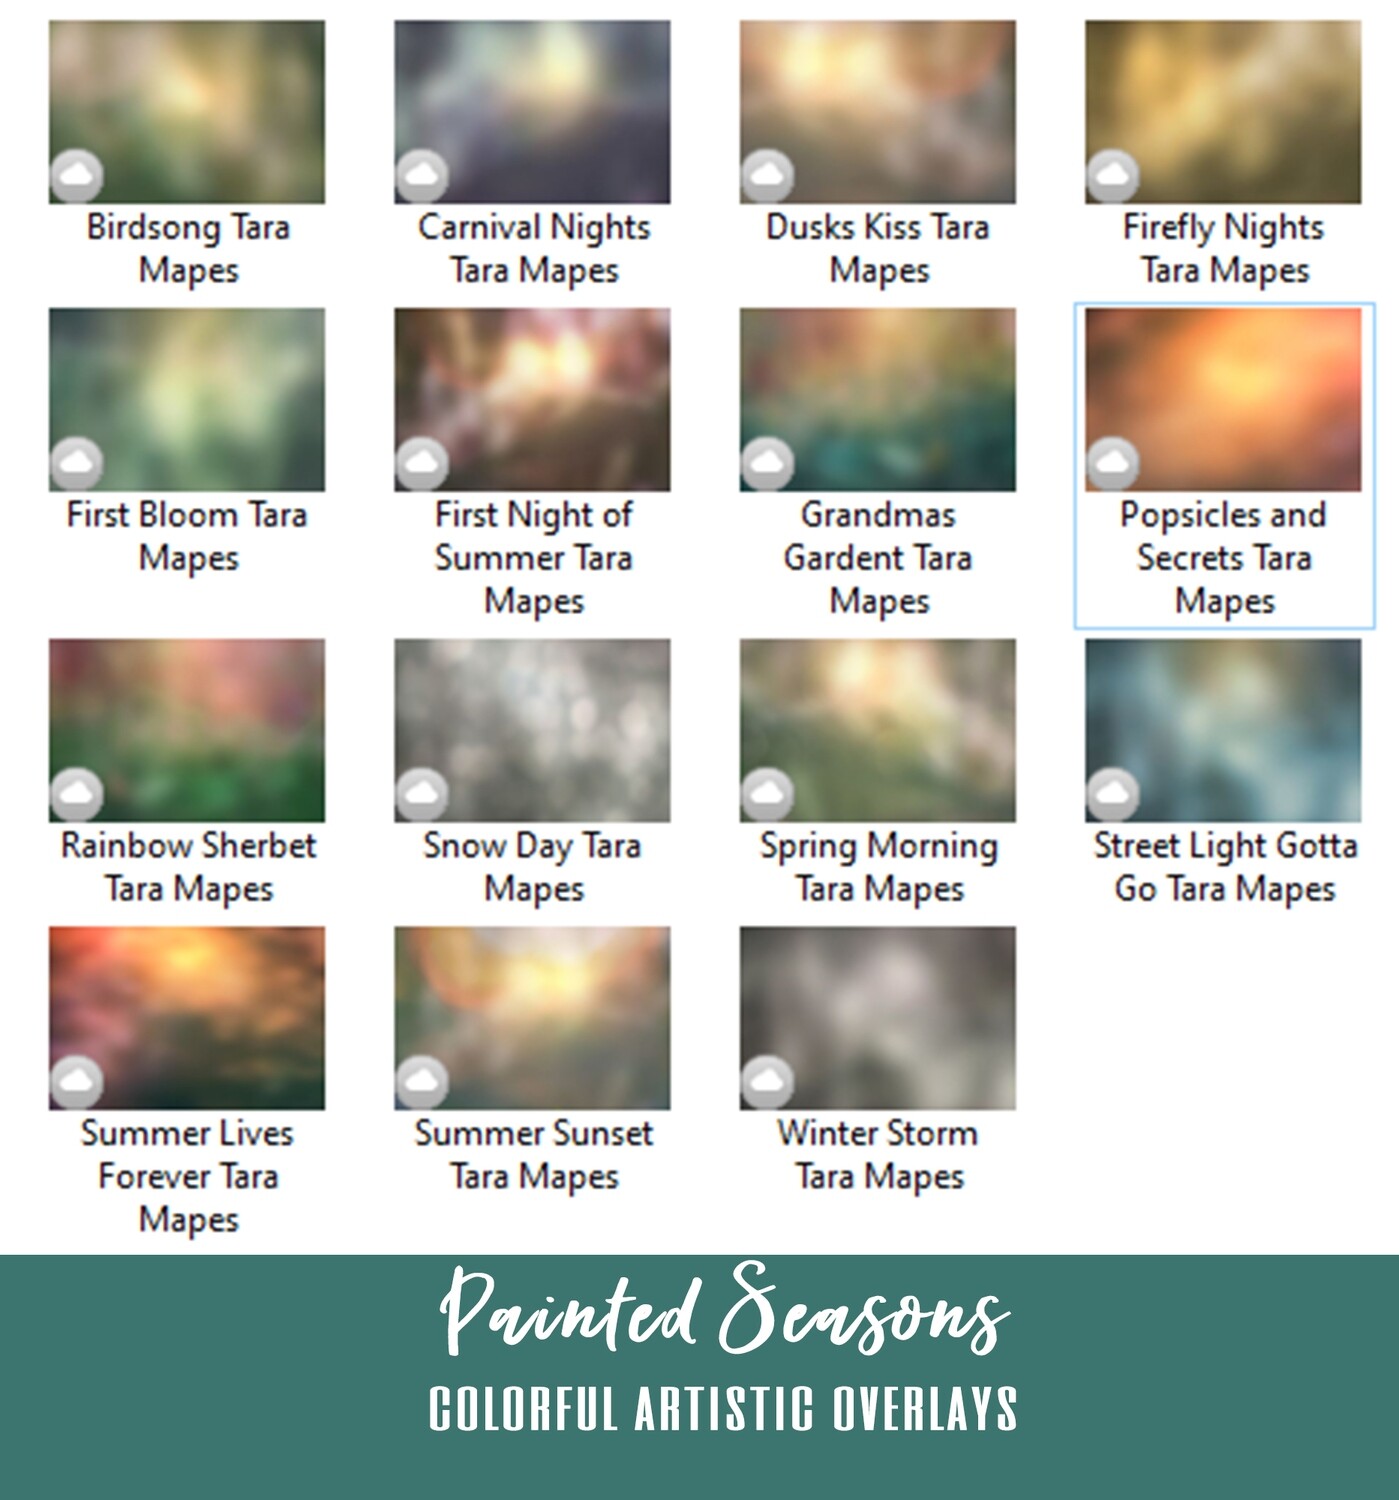 15 Painted Seasons Color Style Overlays - Photoshop Color Films "Painted Seasons" - Photoshop Overlays by Tara Mapes